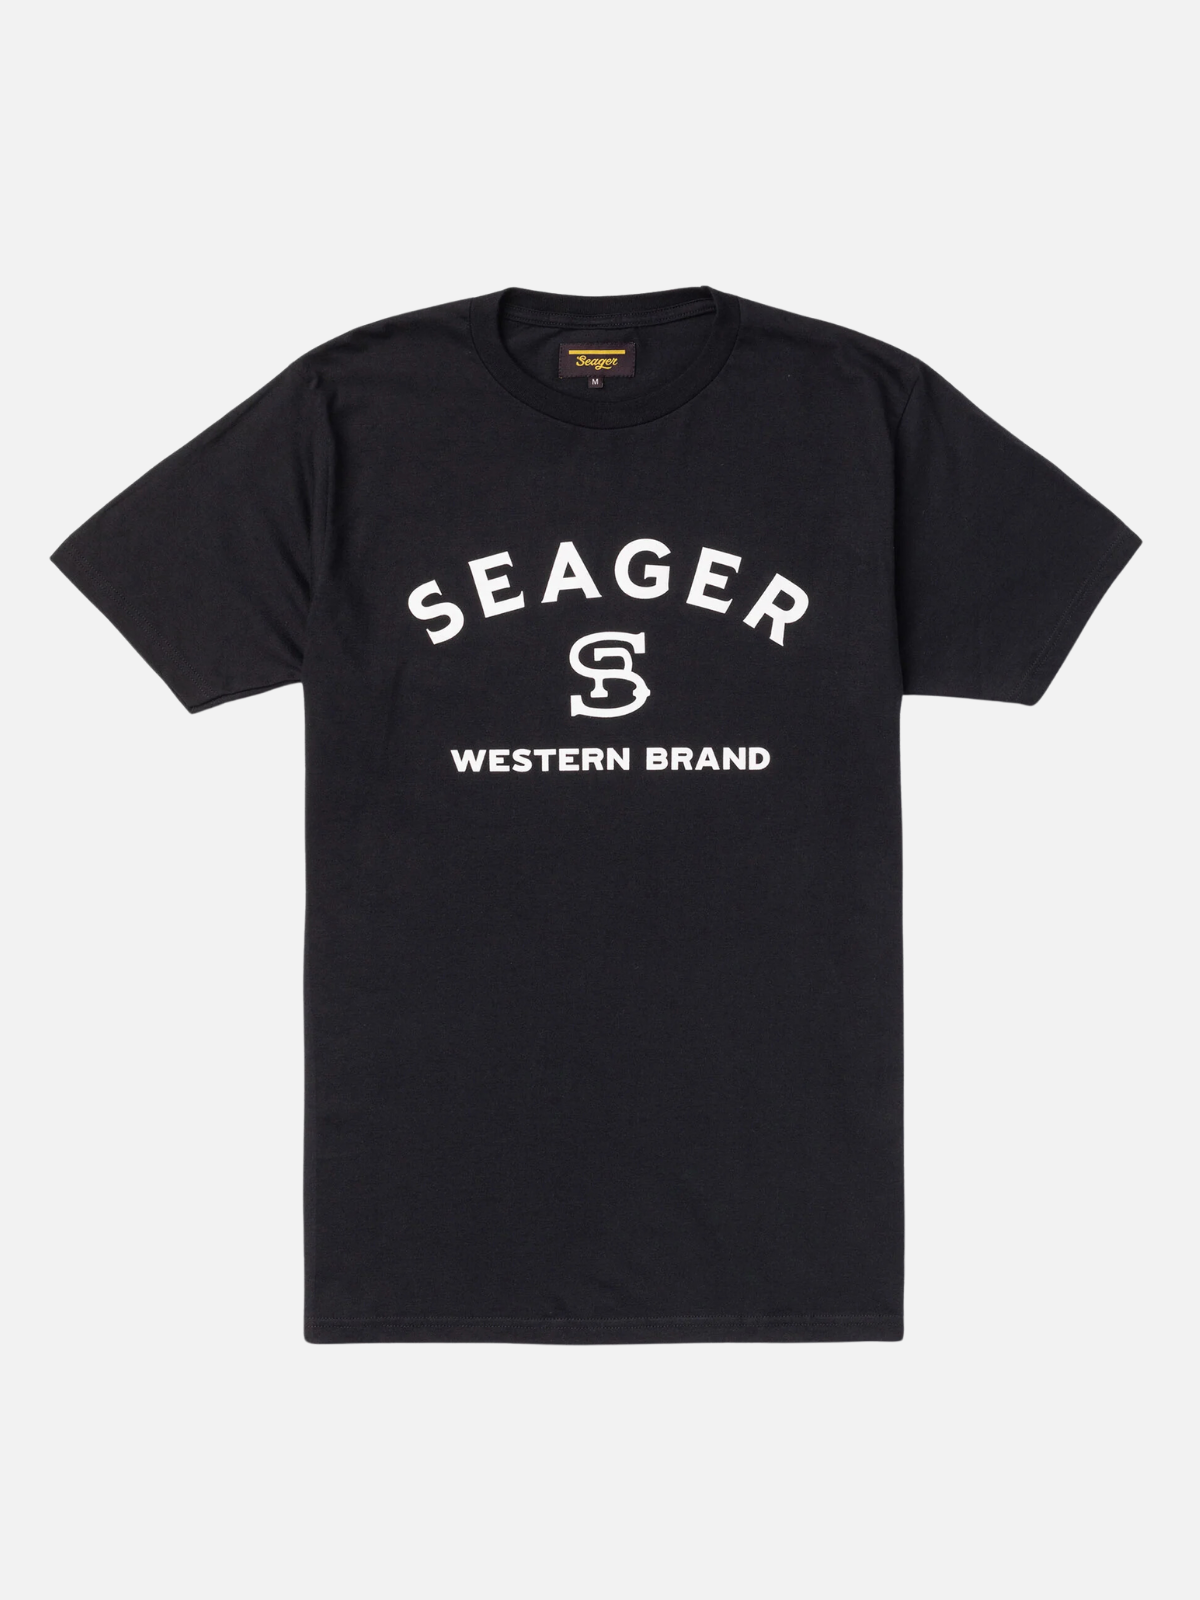 seager branded tee black white graphic t-shirt 100% cotton kempt athens ga georgia men's clothing store